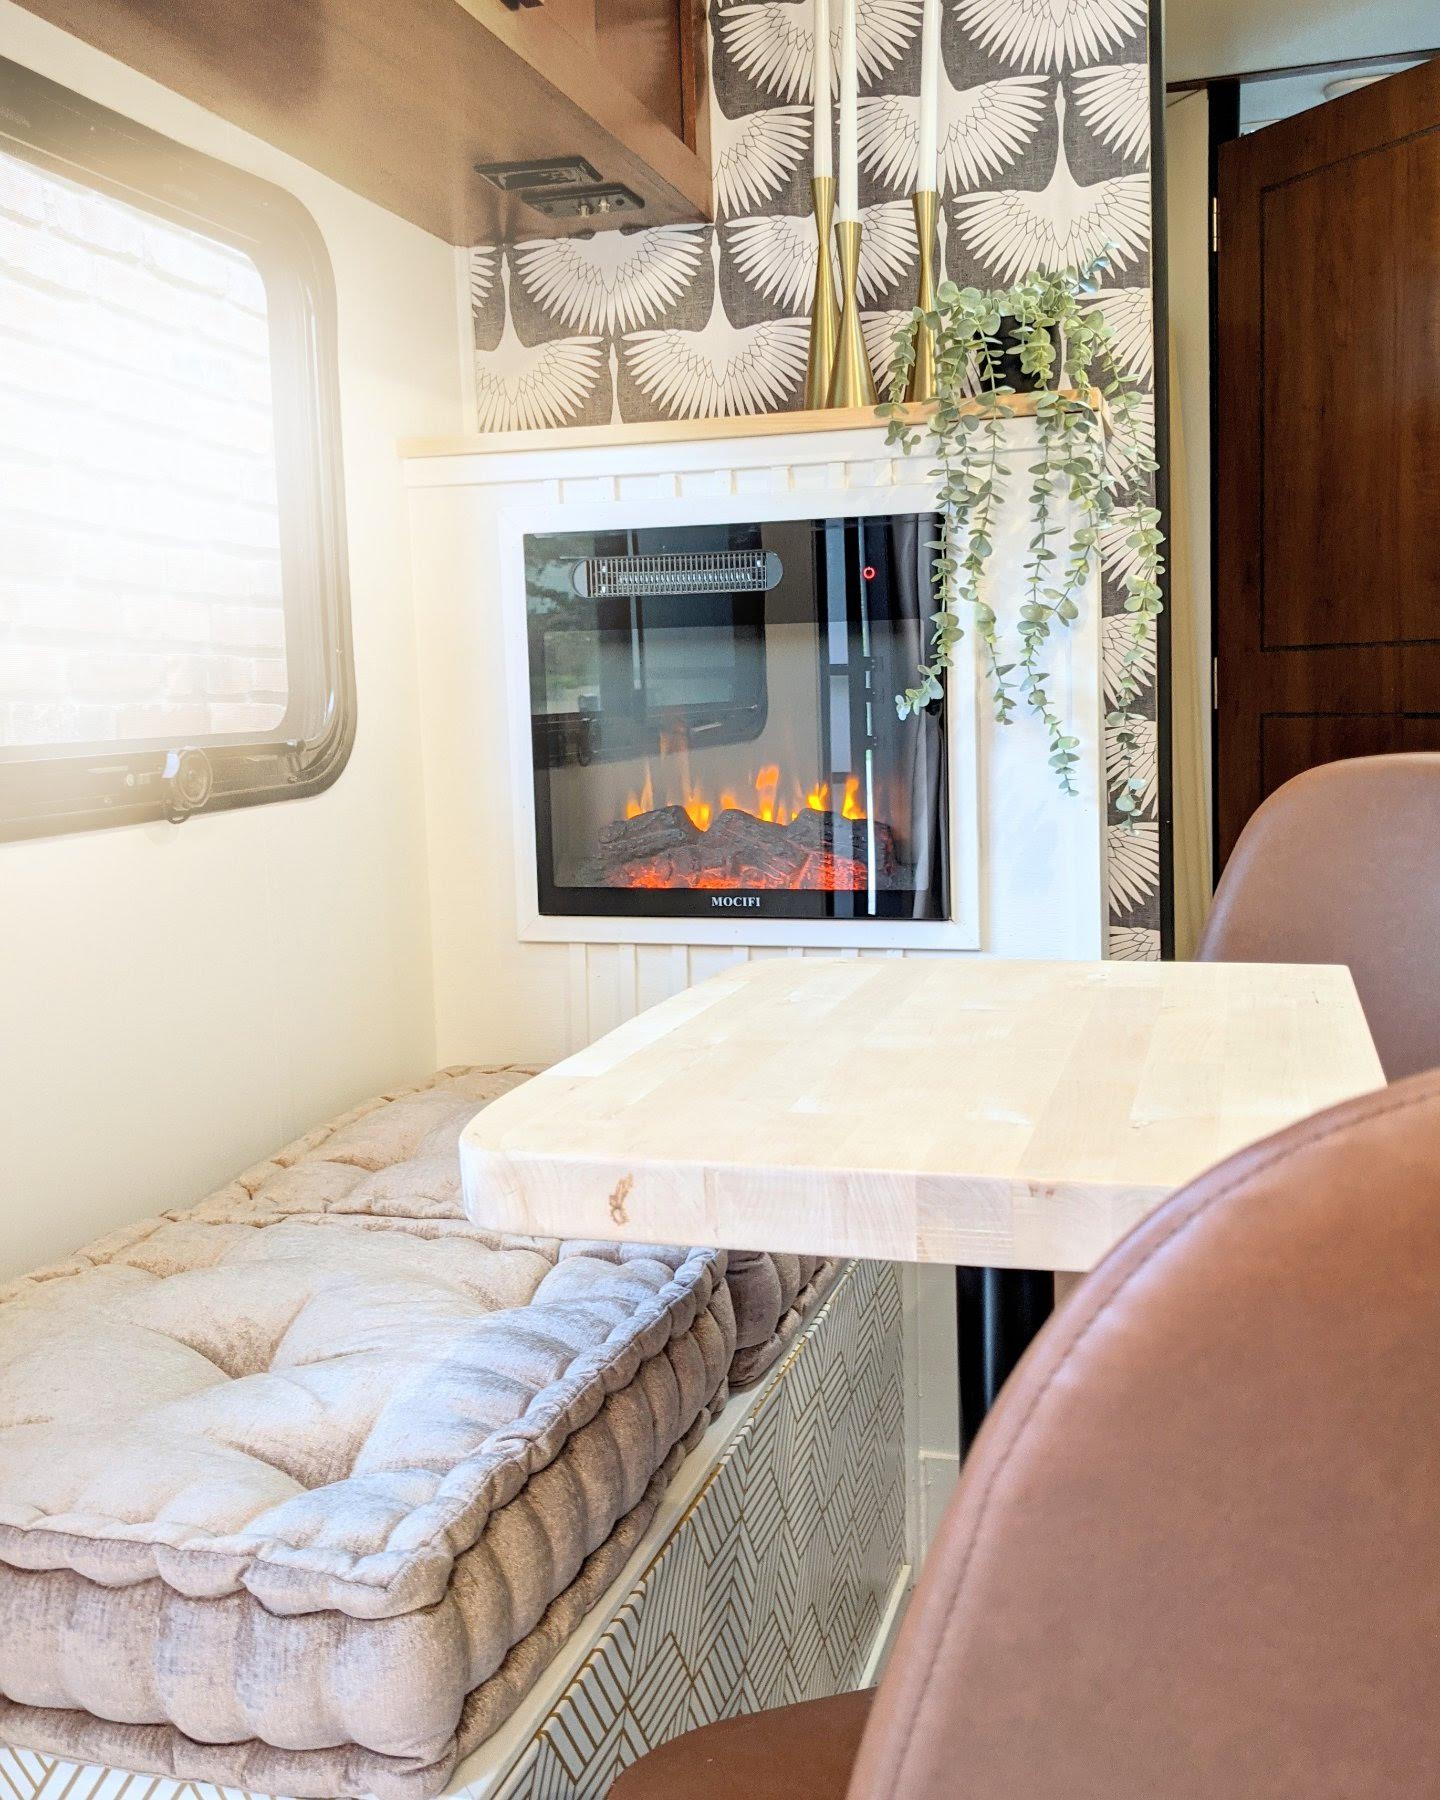 Renovated 2015 Skyline Layton Dart Travel Trailer RV for Sale All Things with Purpose Sarah Lemp 5